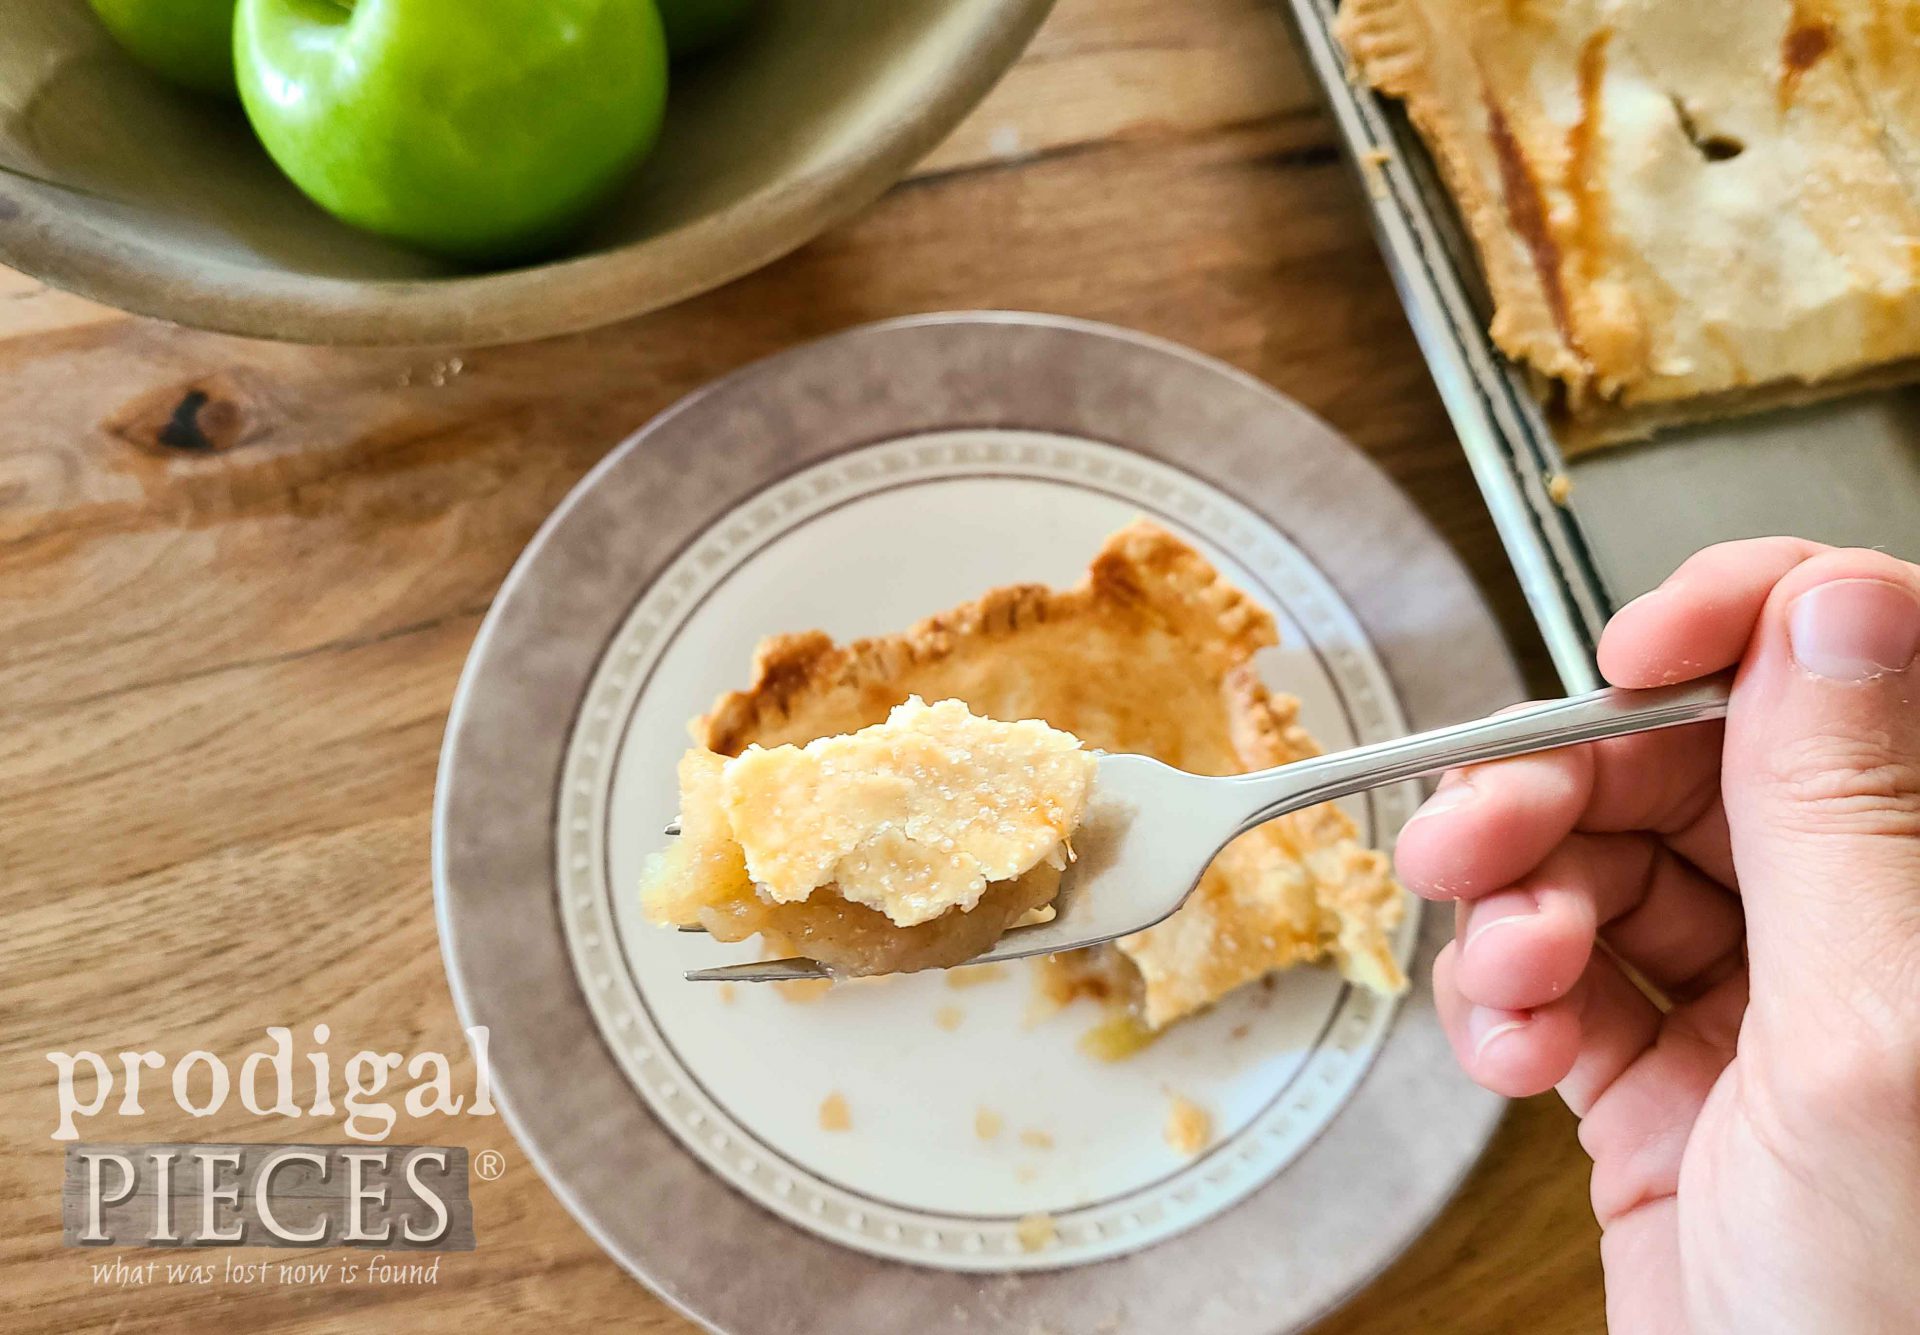 Bite of Apple Jack Dessert by Prodigal Pieces | Recipe at prodigalpieces.com #prodigalpieces #food #recipe #dessert #baking